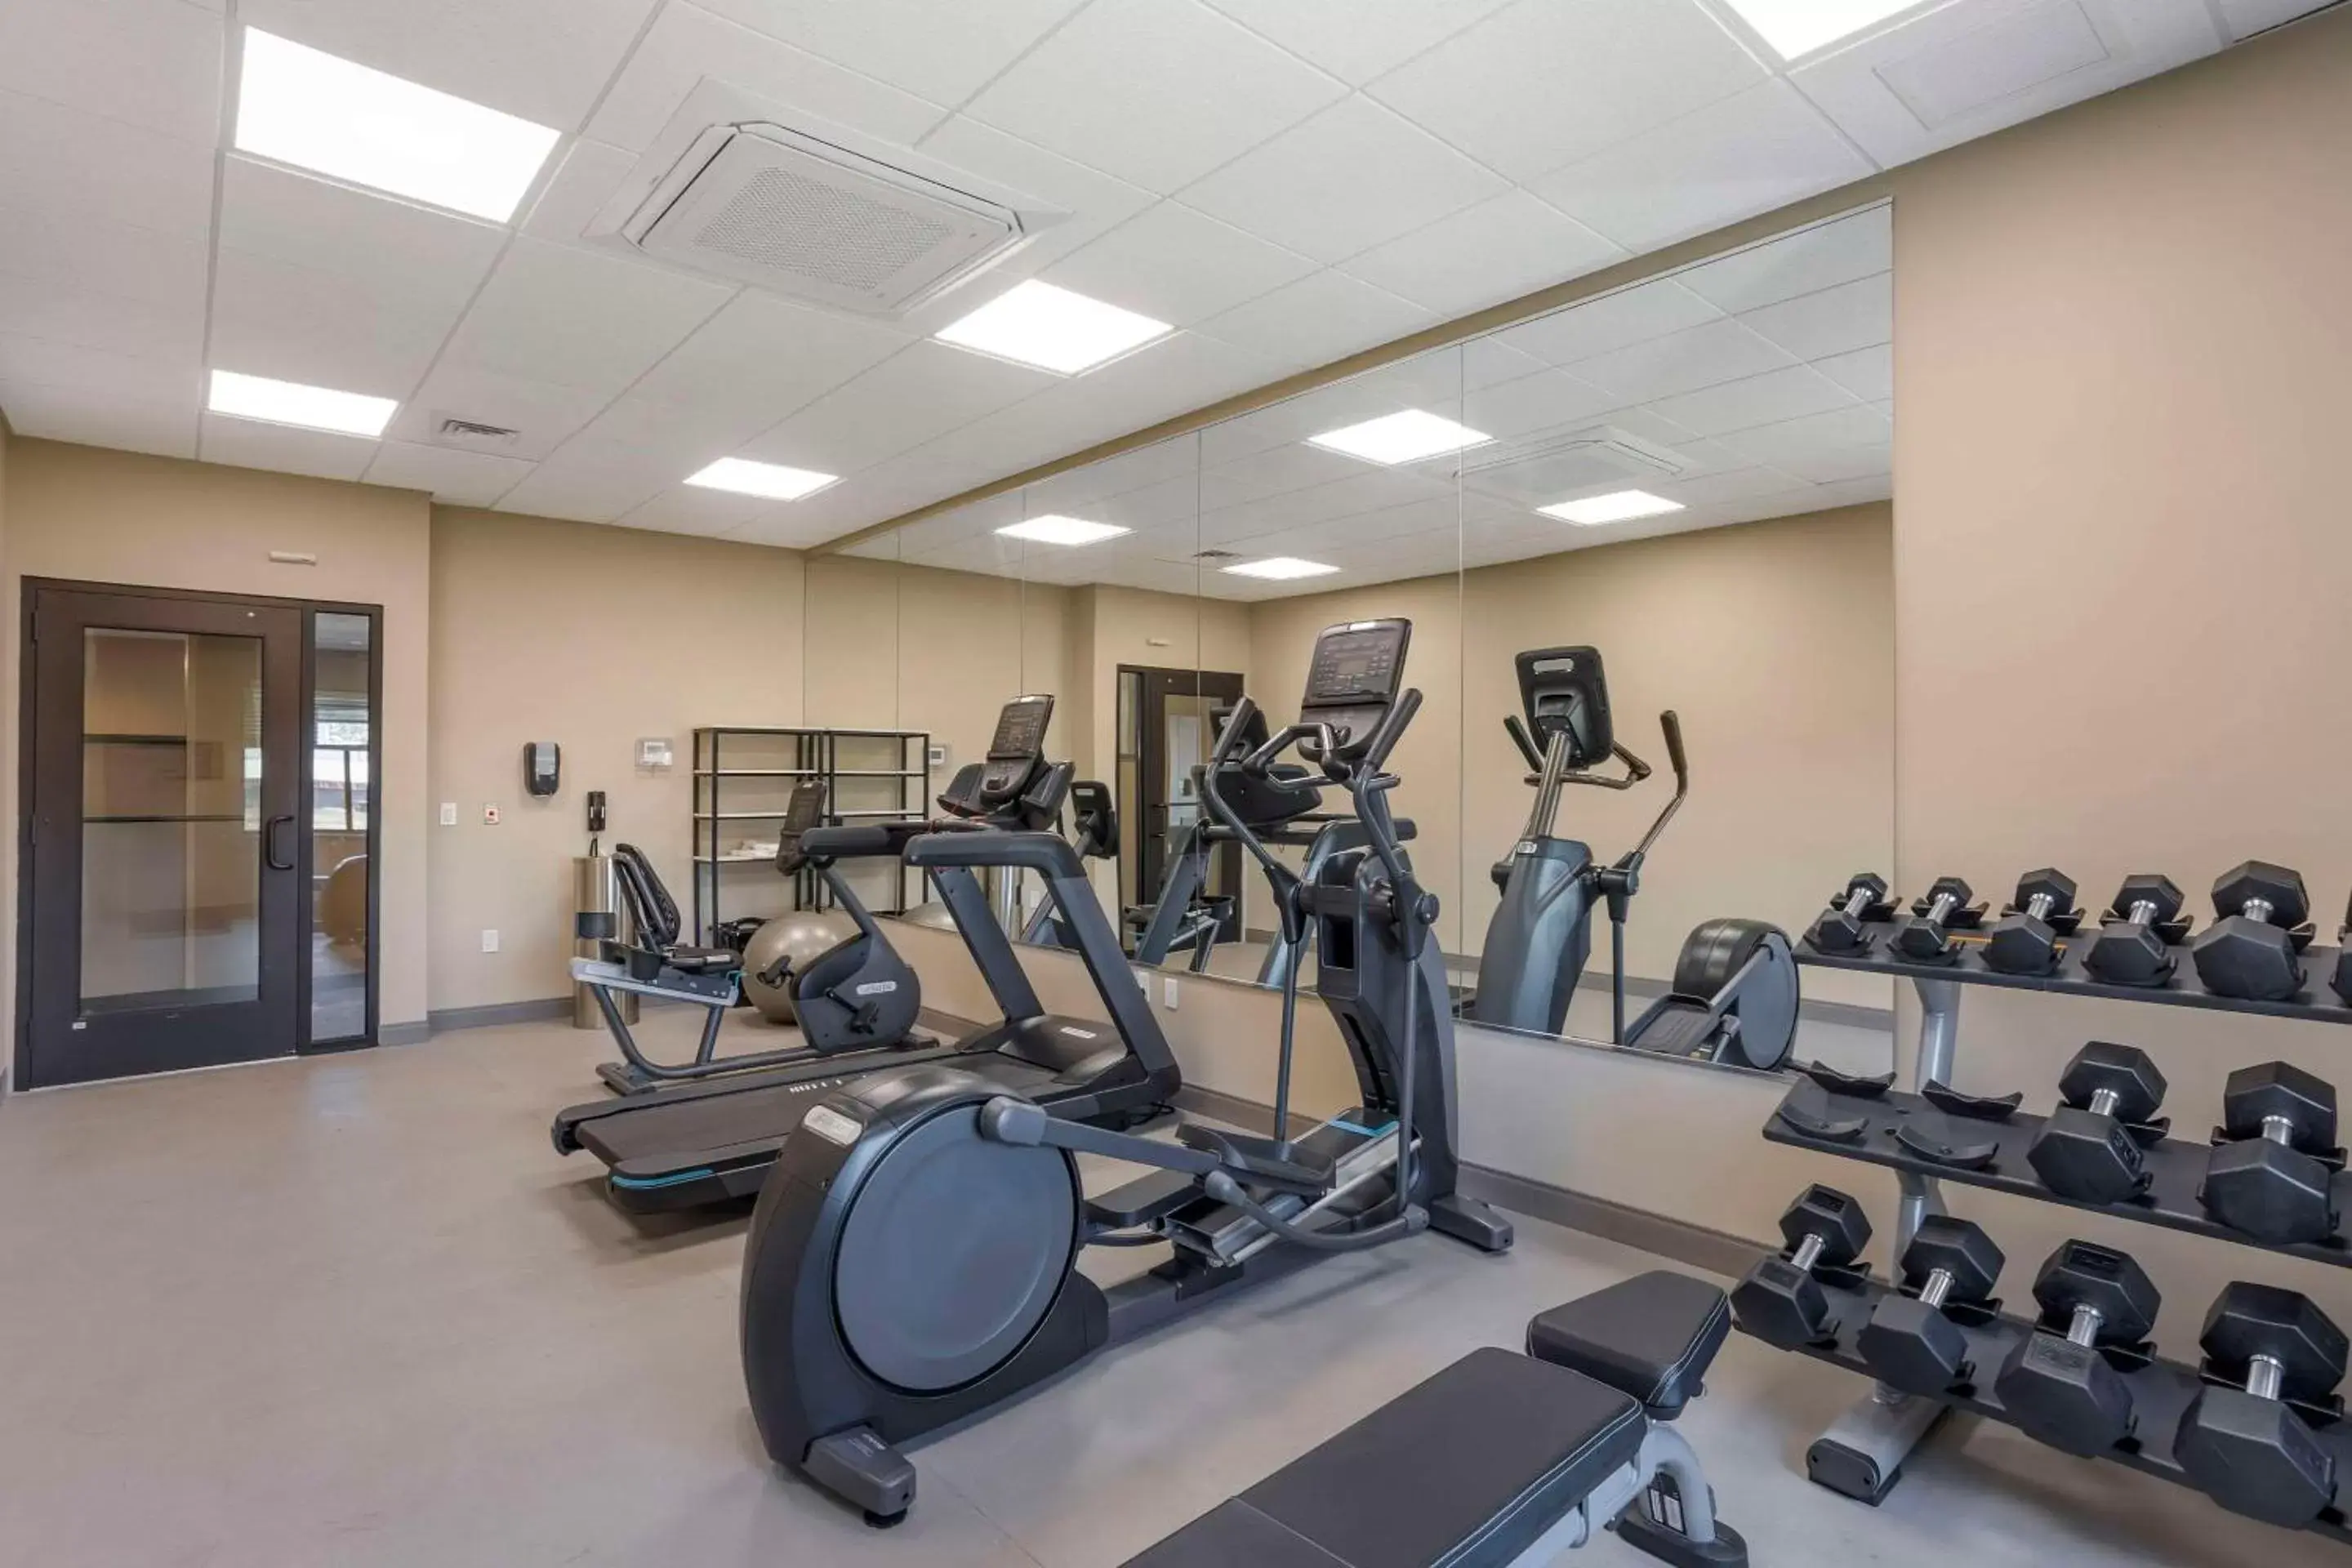 Fitness centre/facilities, Fitness Center/Facilities in Sleep Inn North - Central York